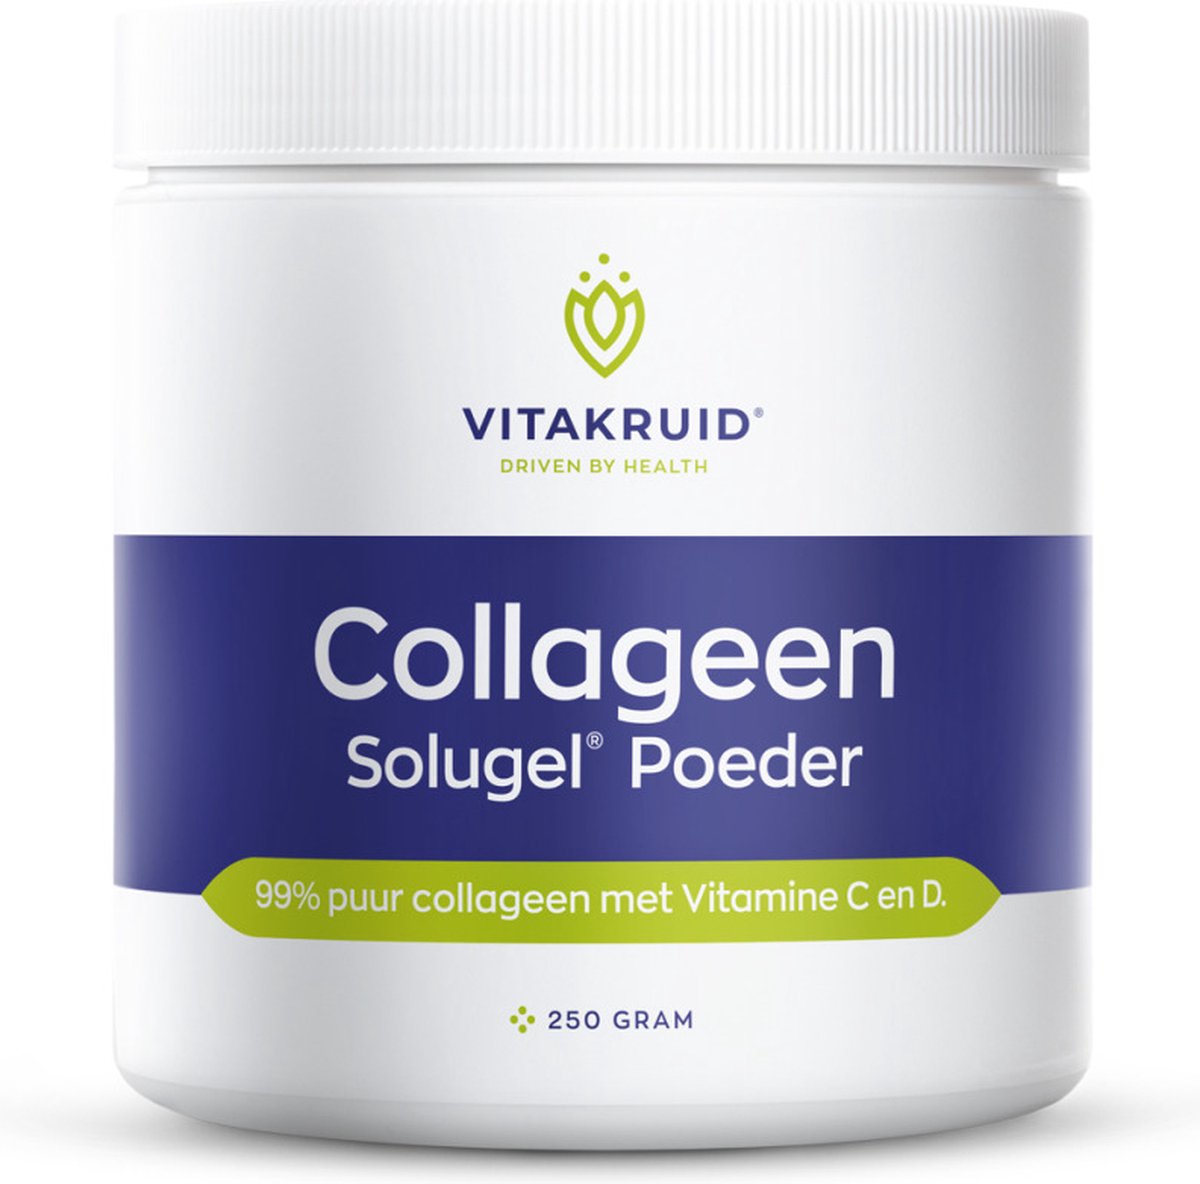 Vitakruid - 99% puur Collageen Solugel® Poeder - 250gr. - Vitakruid